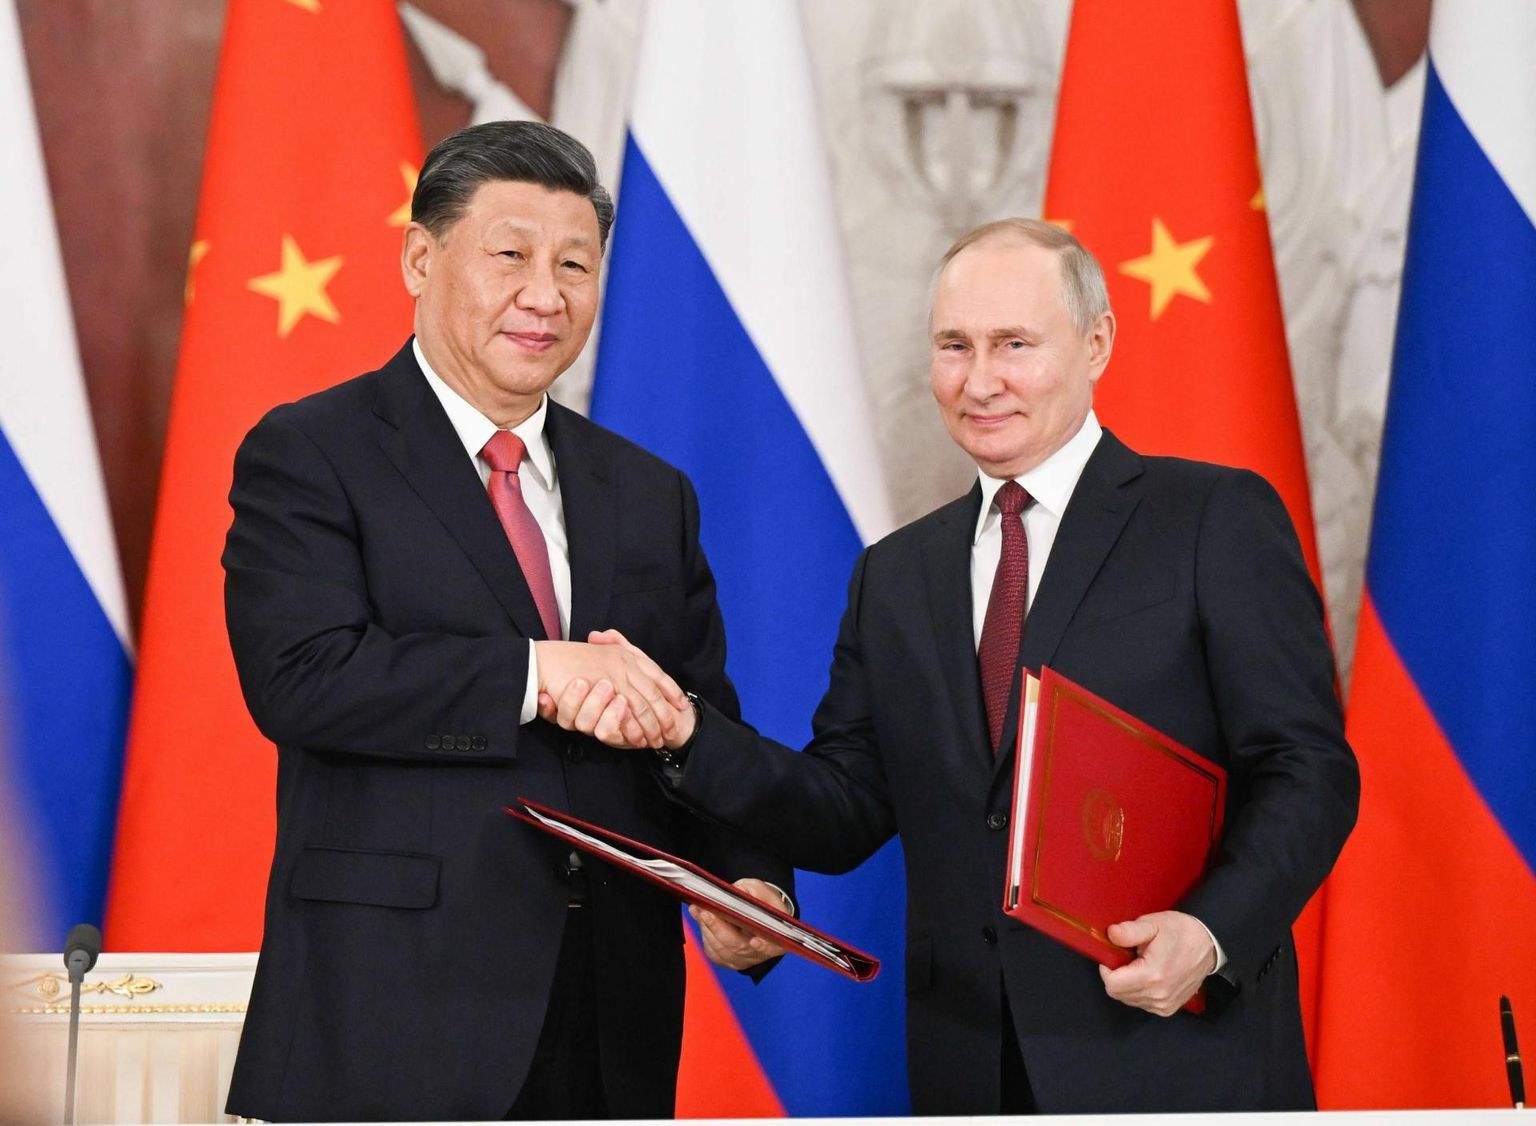 Hiina president Xi Jinping ja Venemaa riigipea Vladimir Putin Kremlis. FOTO: Chine Nouvelle/Sipa/Scanpix